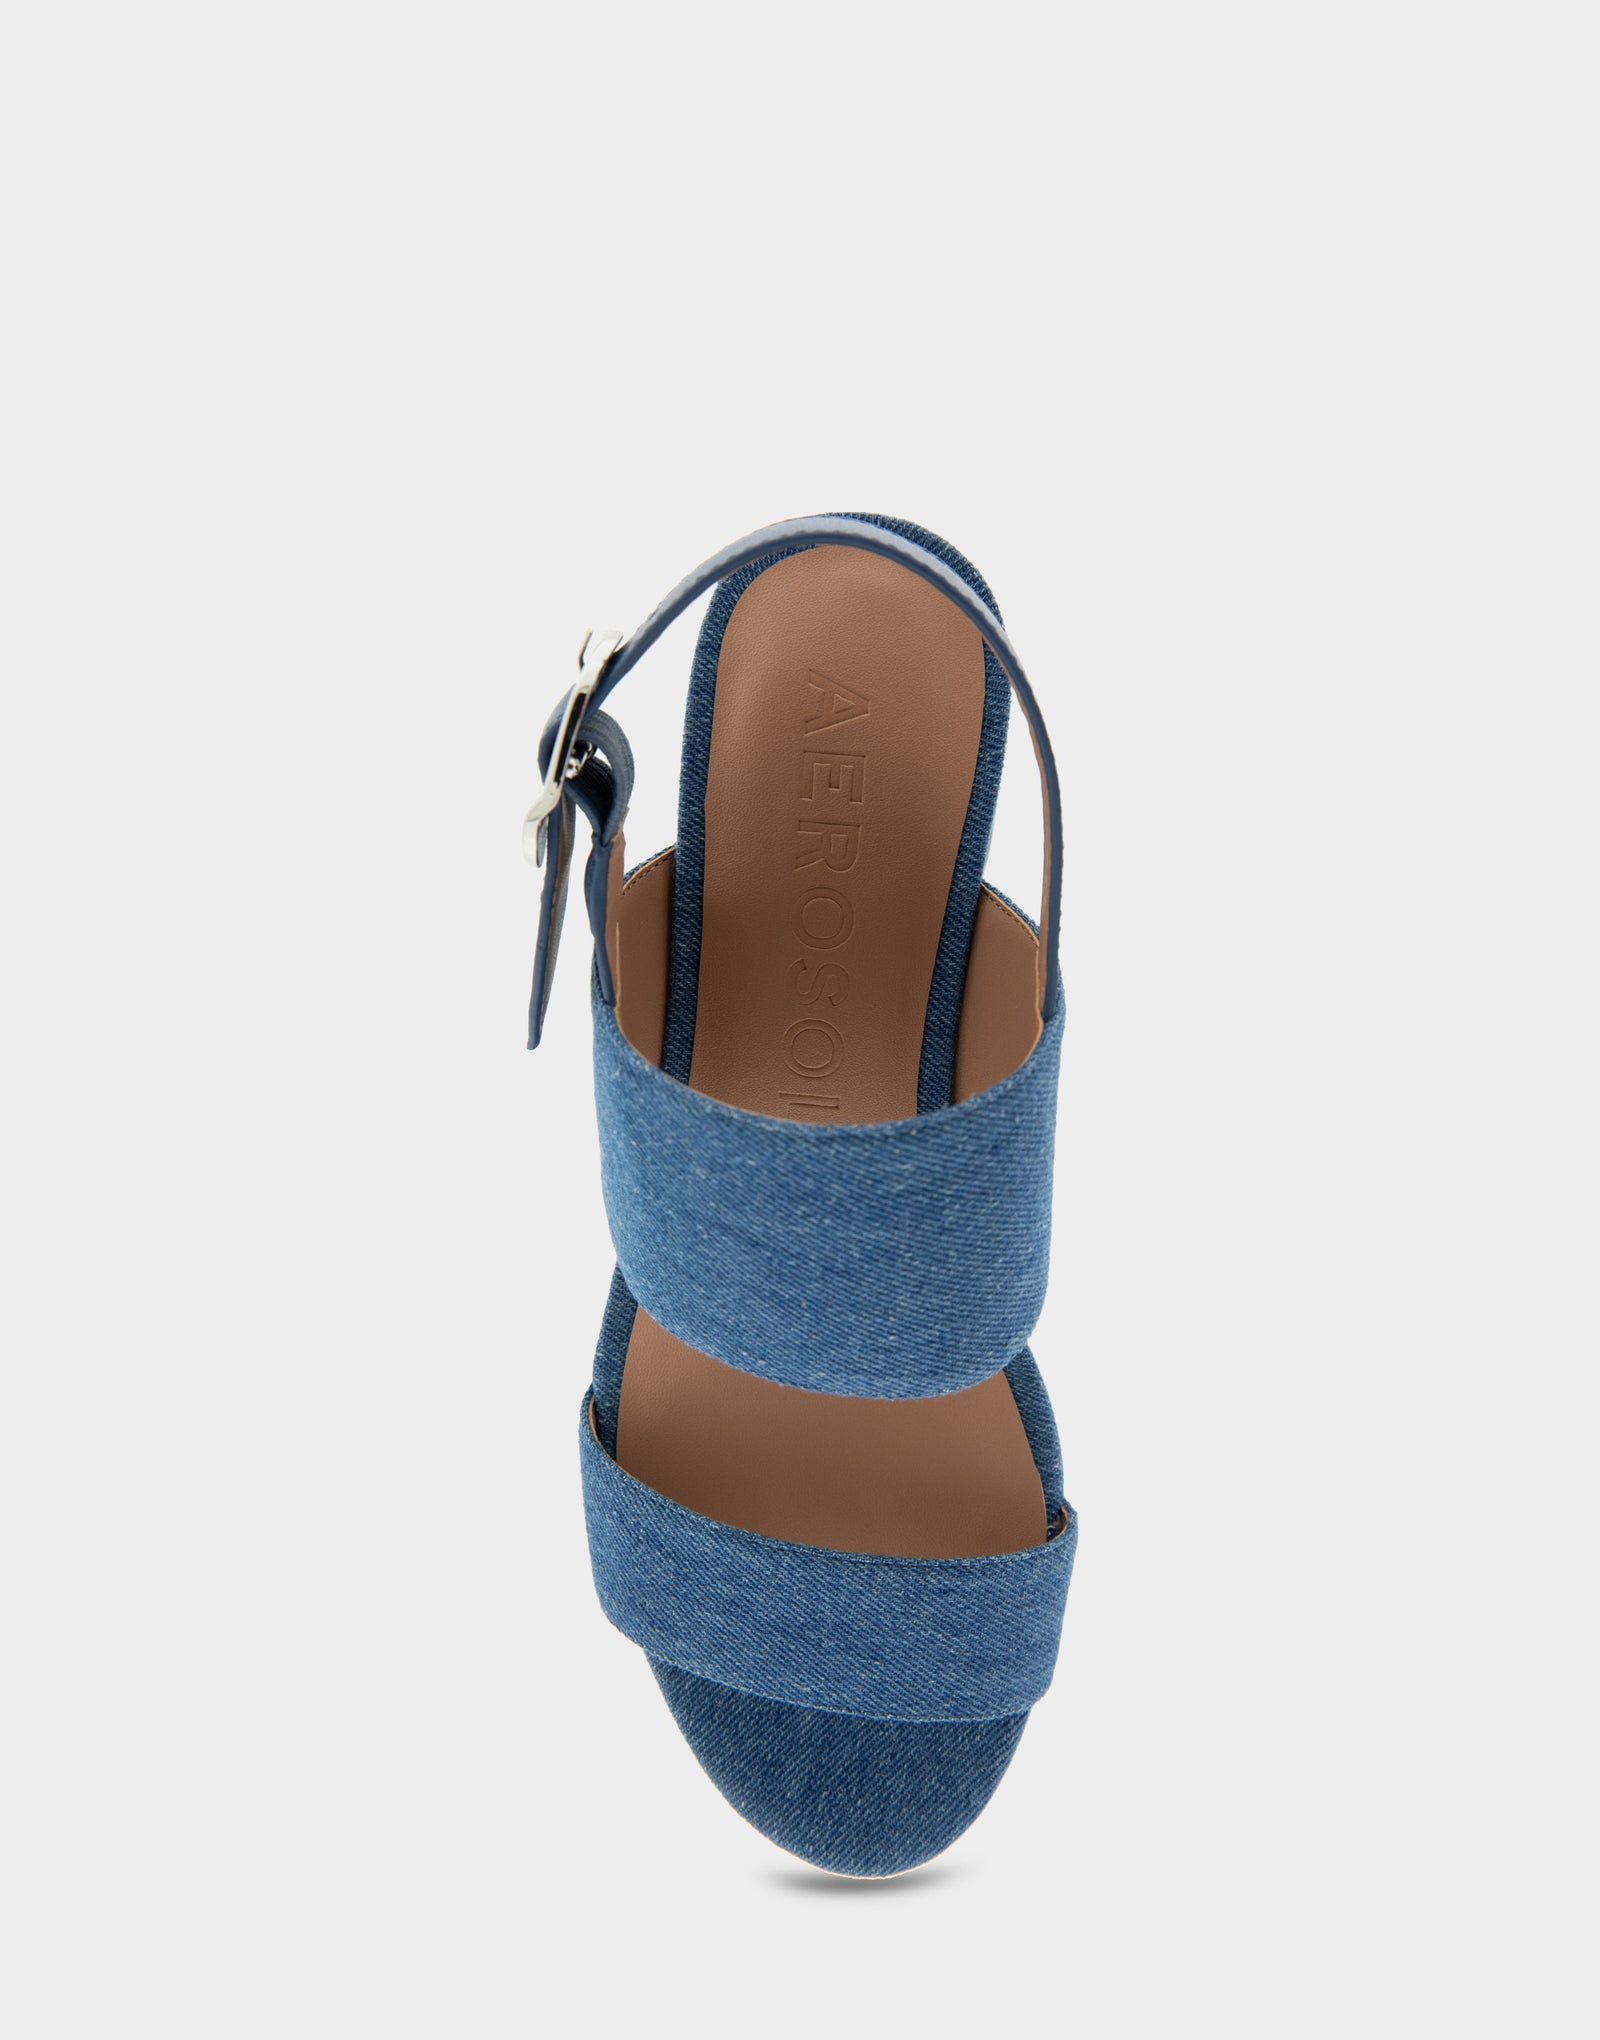 Women's Platform Sandal in Denim Fabric